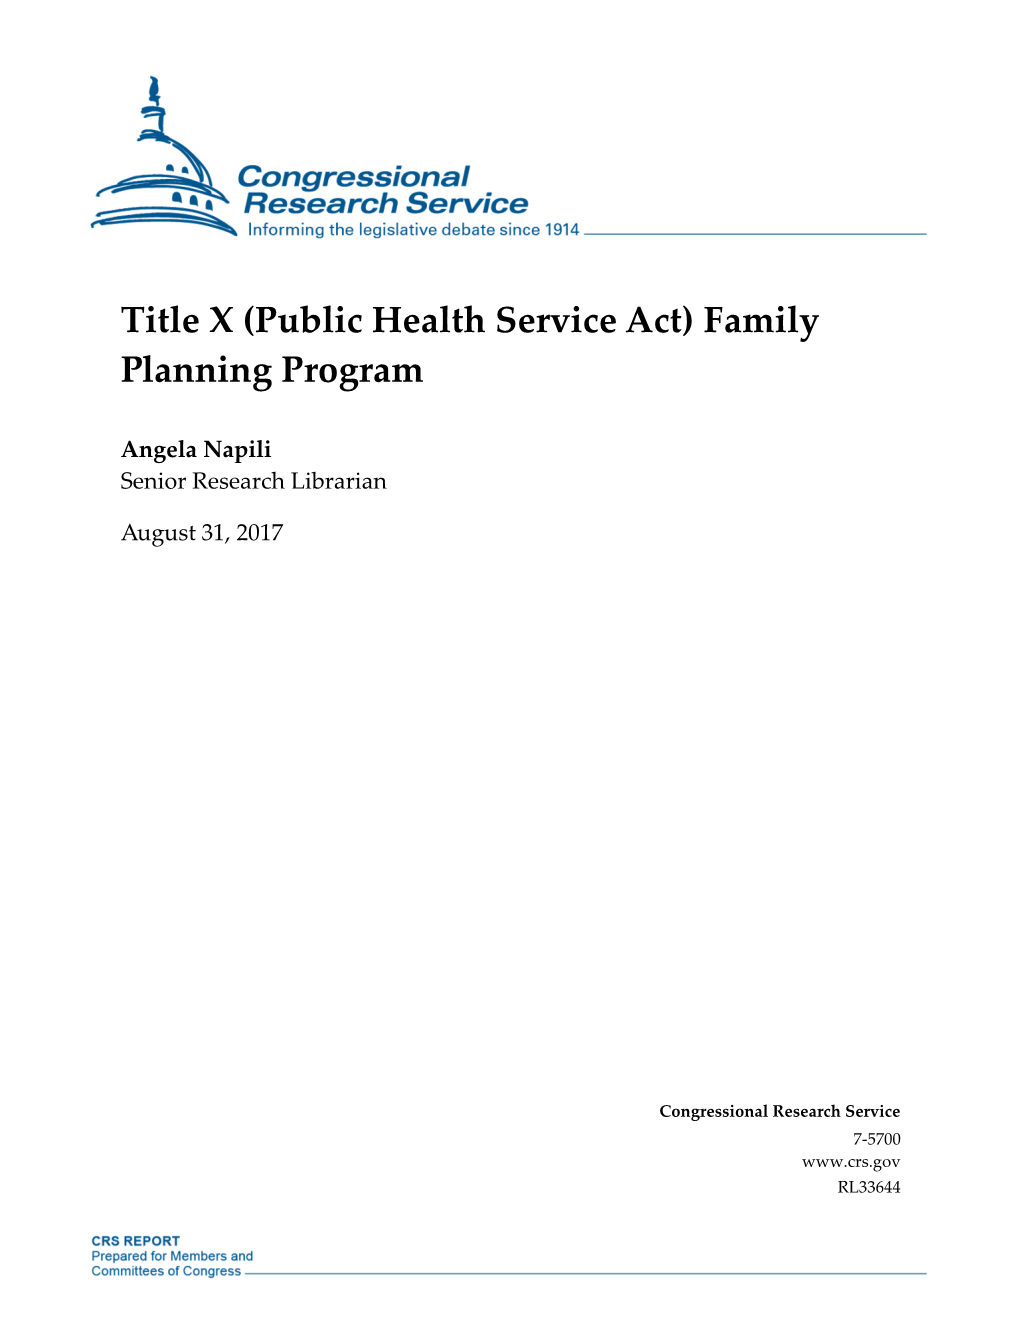 Title X (Public Health Service Act) Family Planning Program